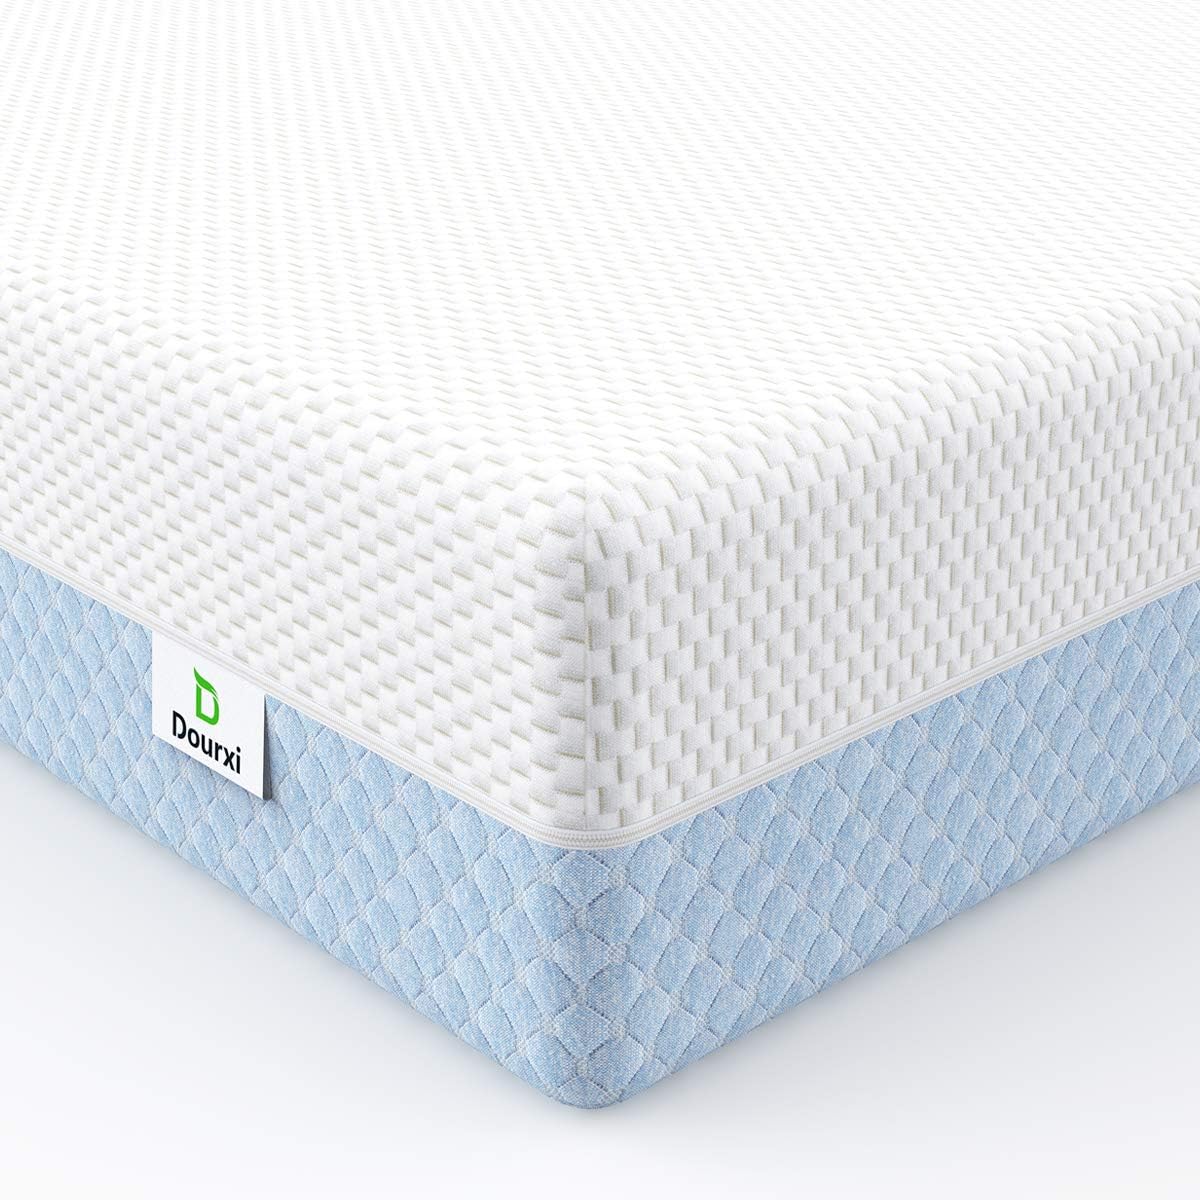 Dourxi Crib Mattress, Dual Sided Comfort Memory Foam Toddler Bed Mattress